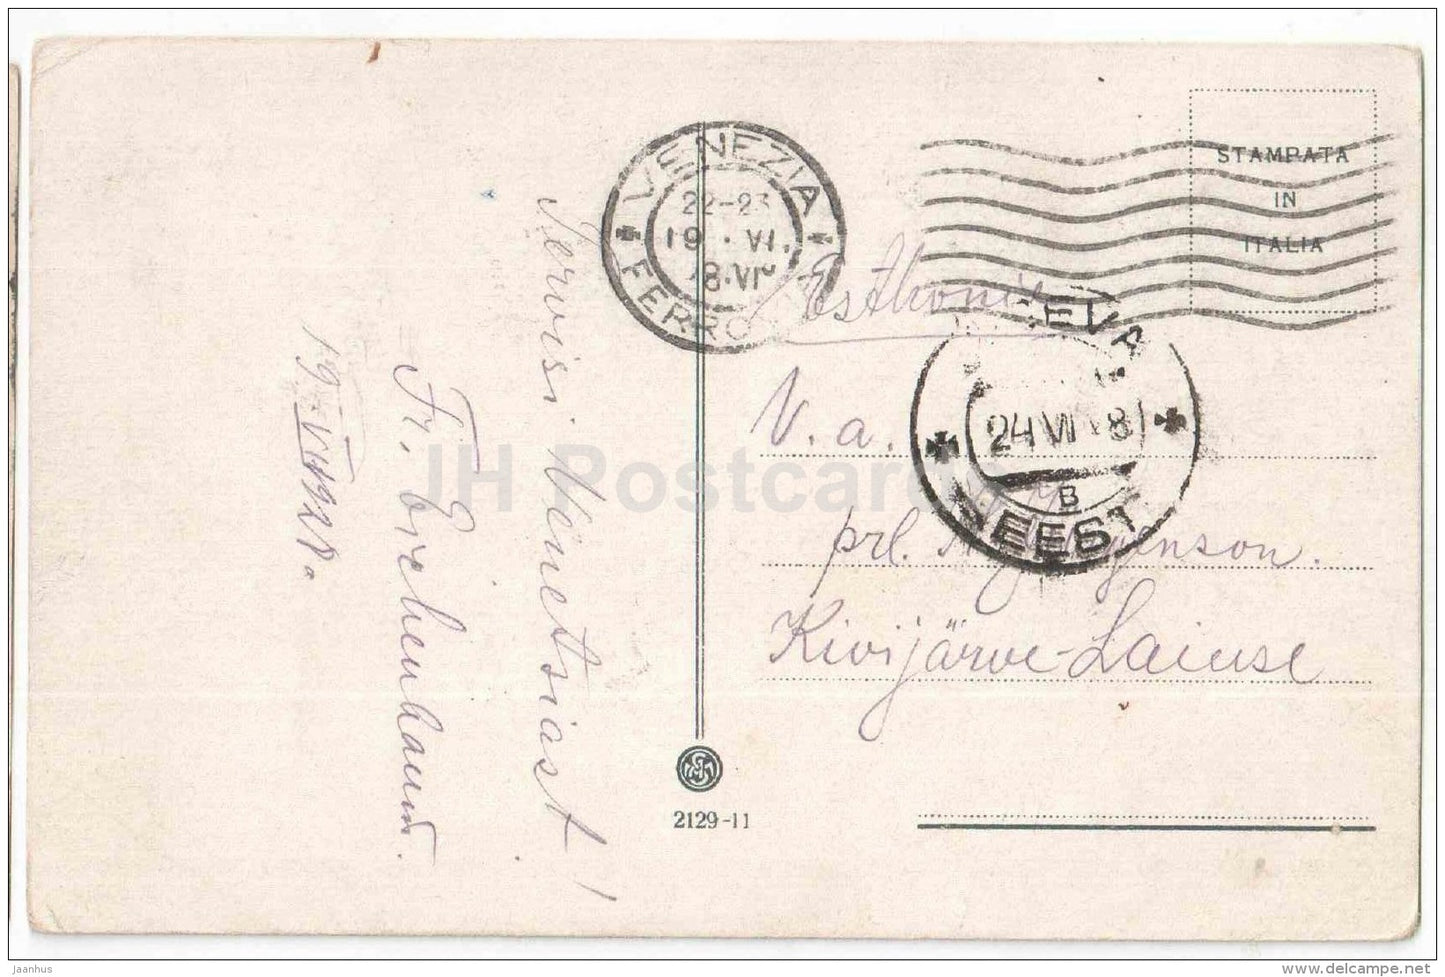 Canal Grande - Palazzo Franchetti - Venice - Venezia -2129-11 - Italia - Italy - sent from Italy Venezia to Estonia 1928 - JH Postcards